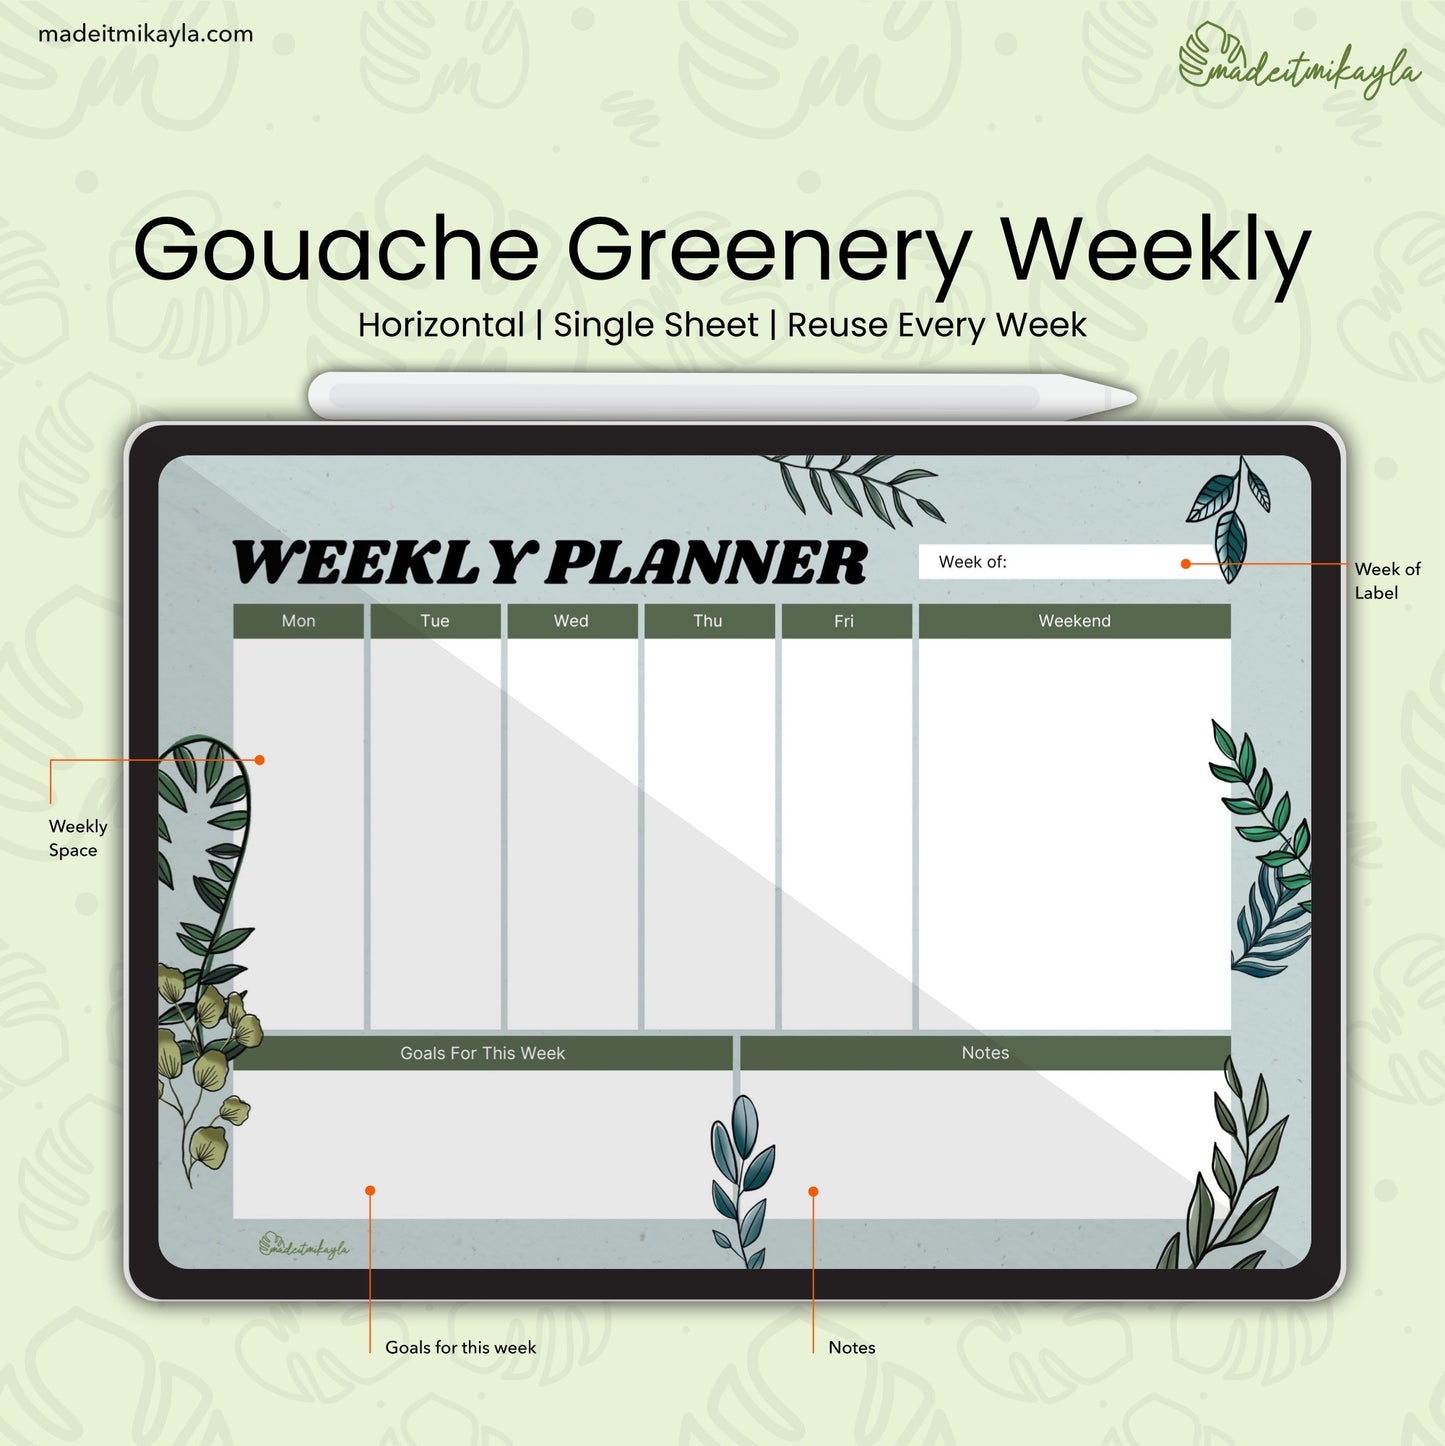 Gouache Greenery Weekly Digital Sheet